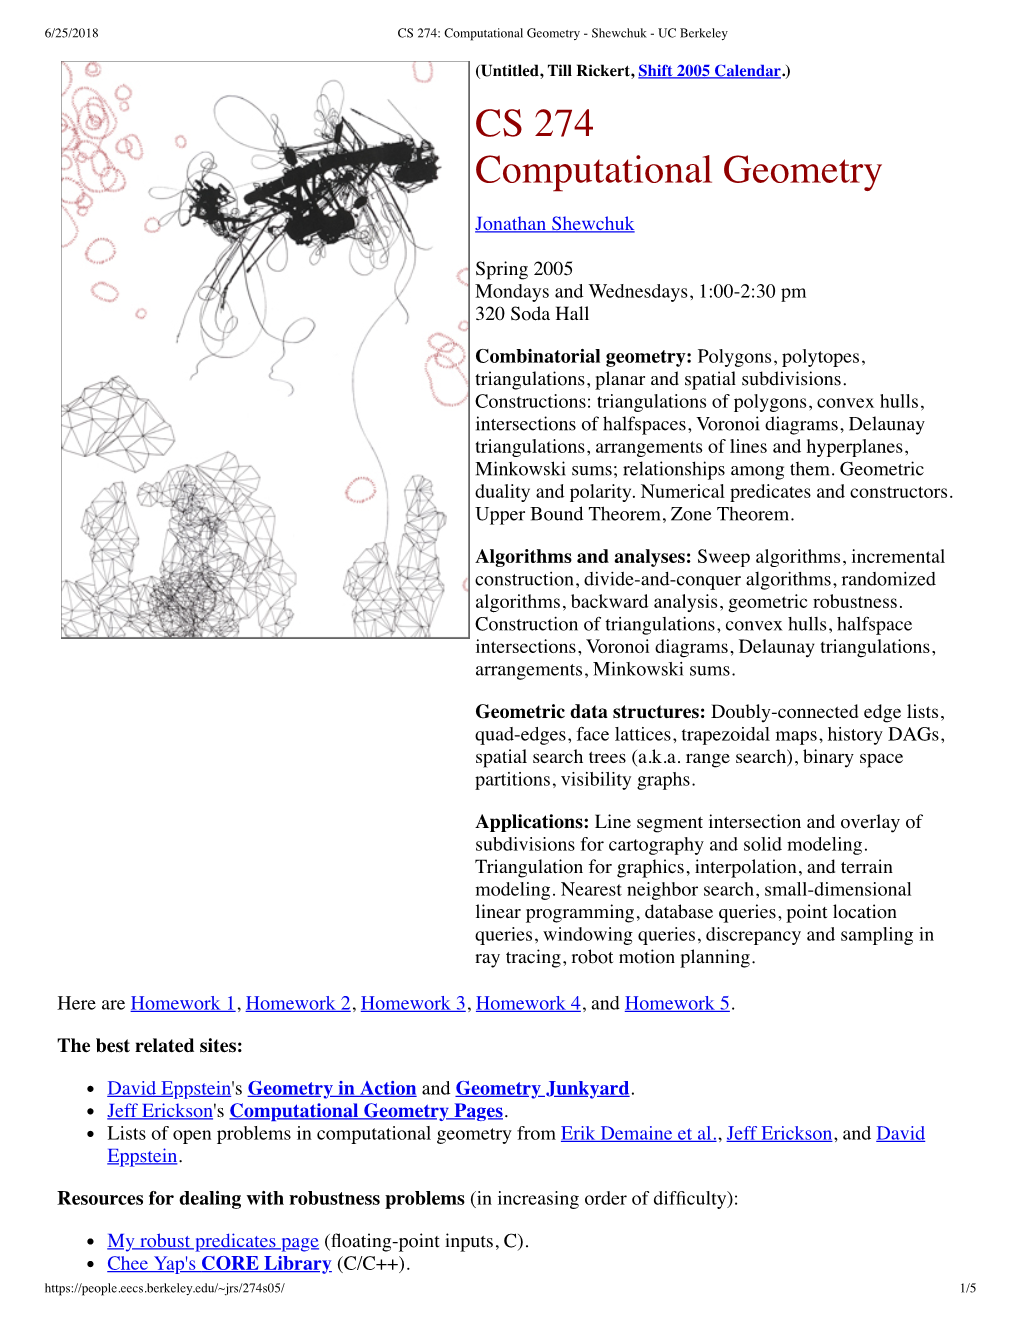 CS 274 Computational Geometry